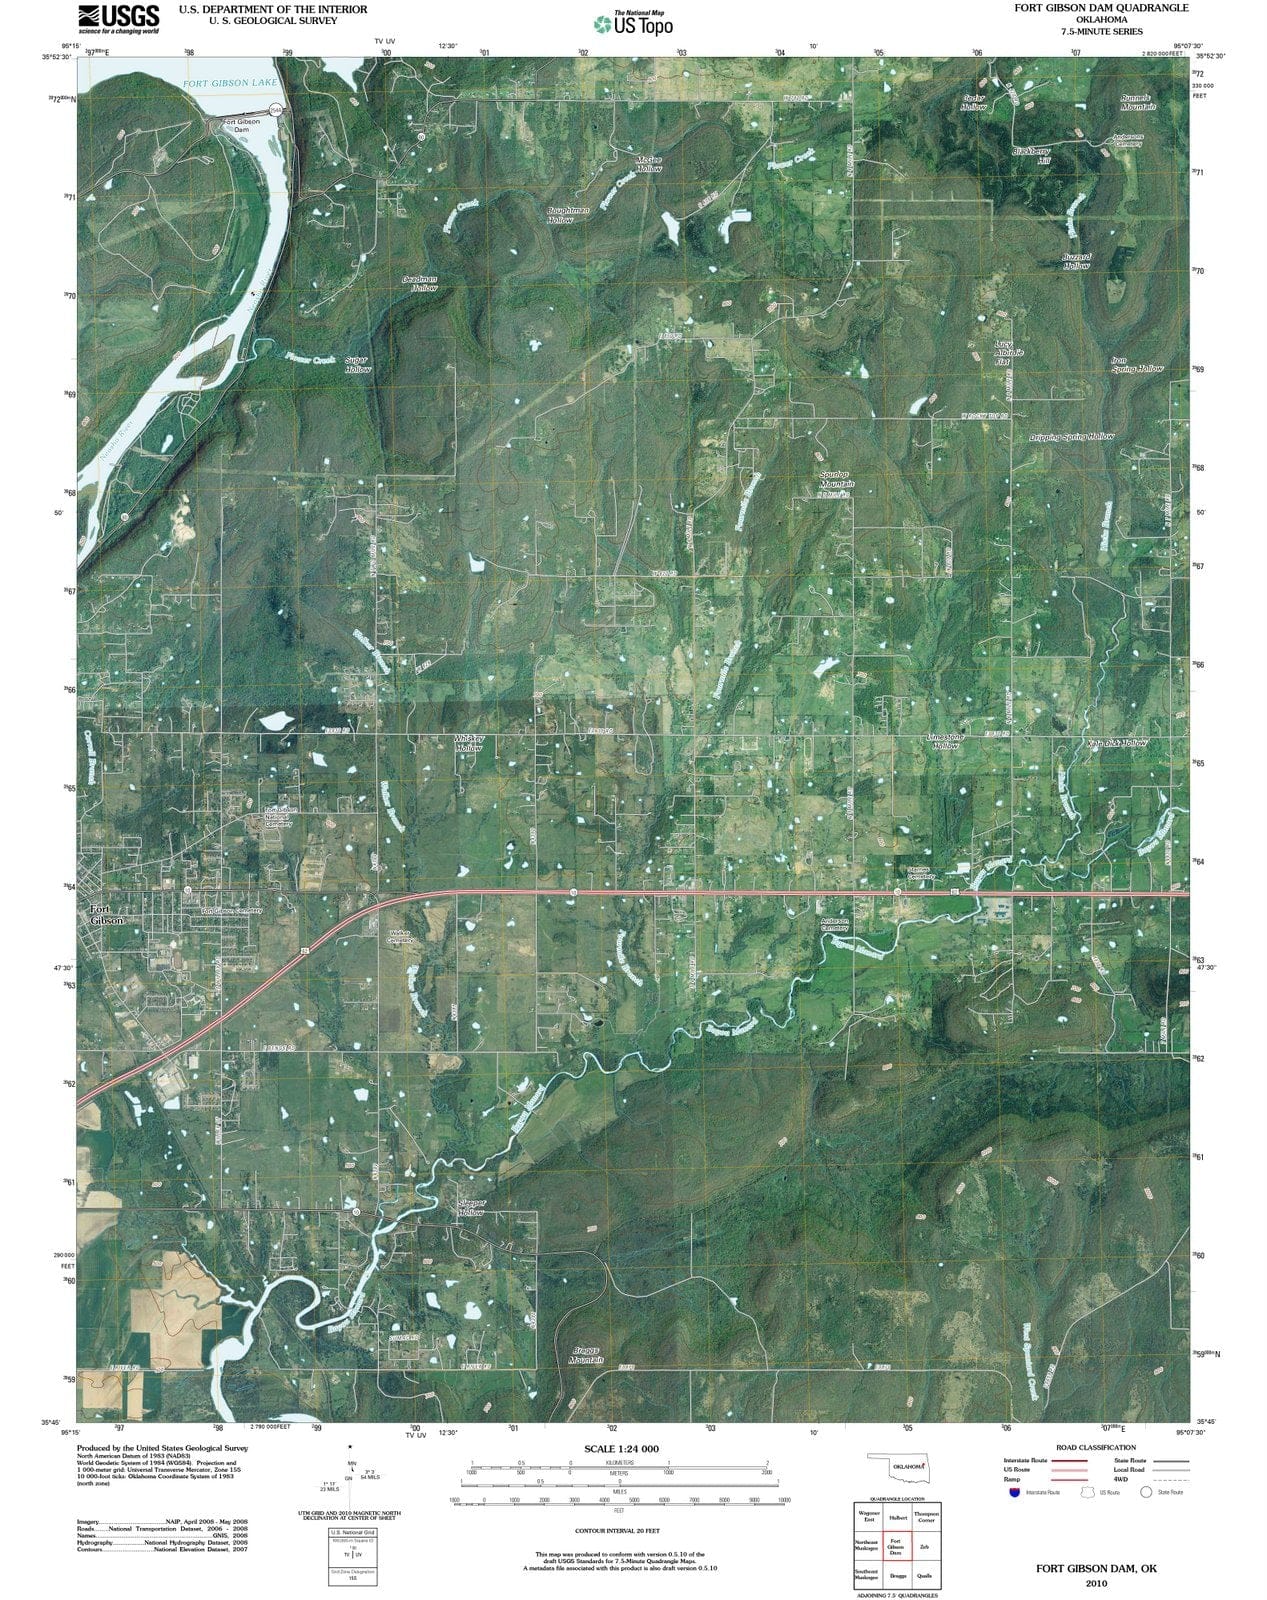 2010 Fort Gibsonam, OK - Oklahoma - USGS Topographic Map